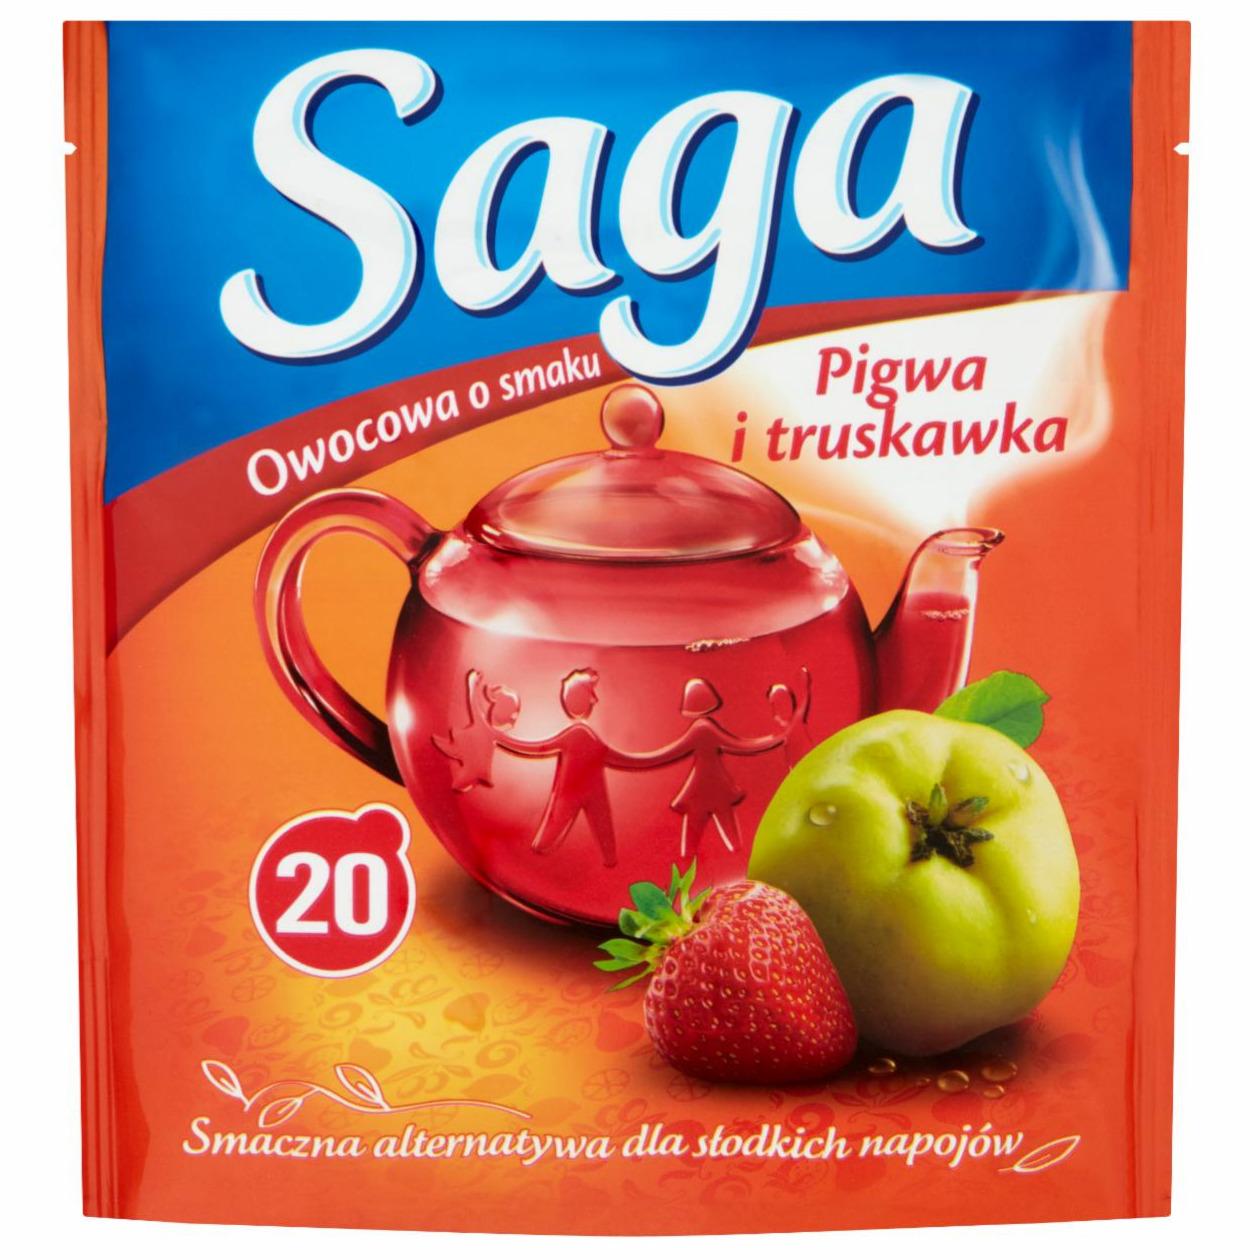 Zdjęcia - Saga Herbatka owocowa o smaku pigwa i truskawka 34 g (20 torebek)